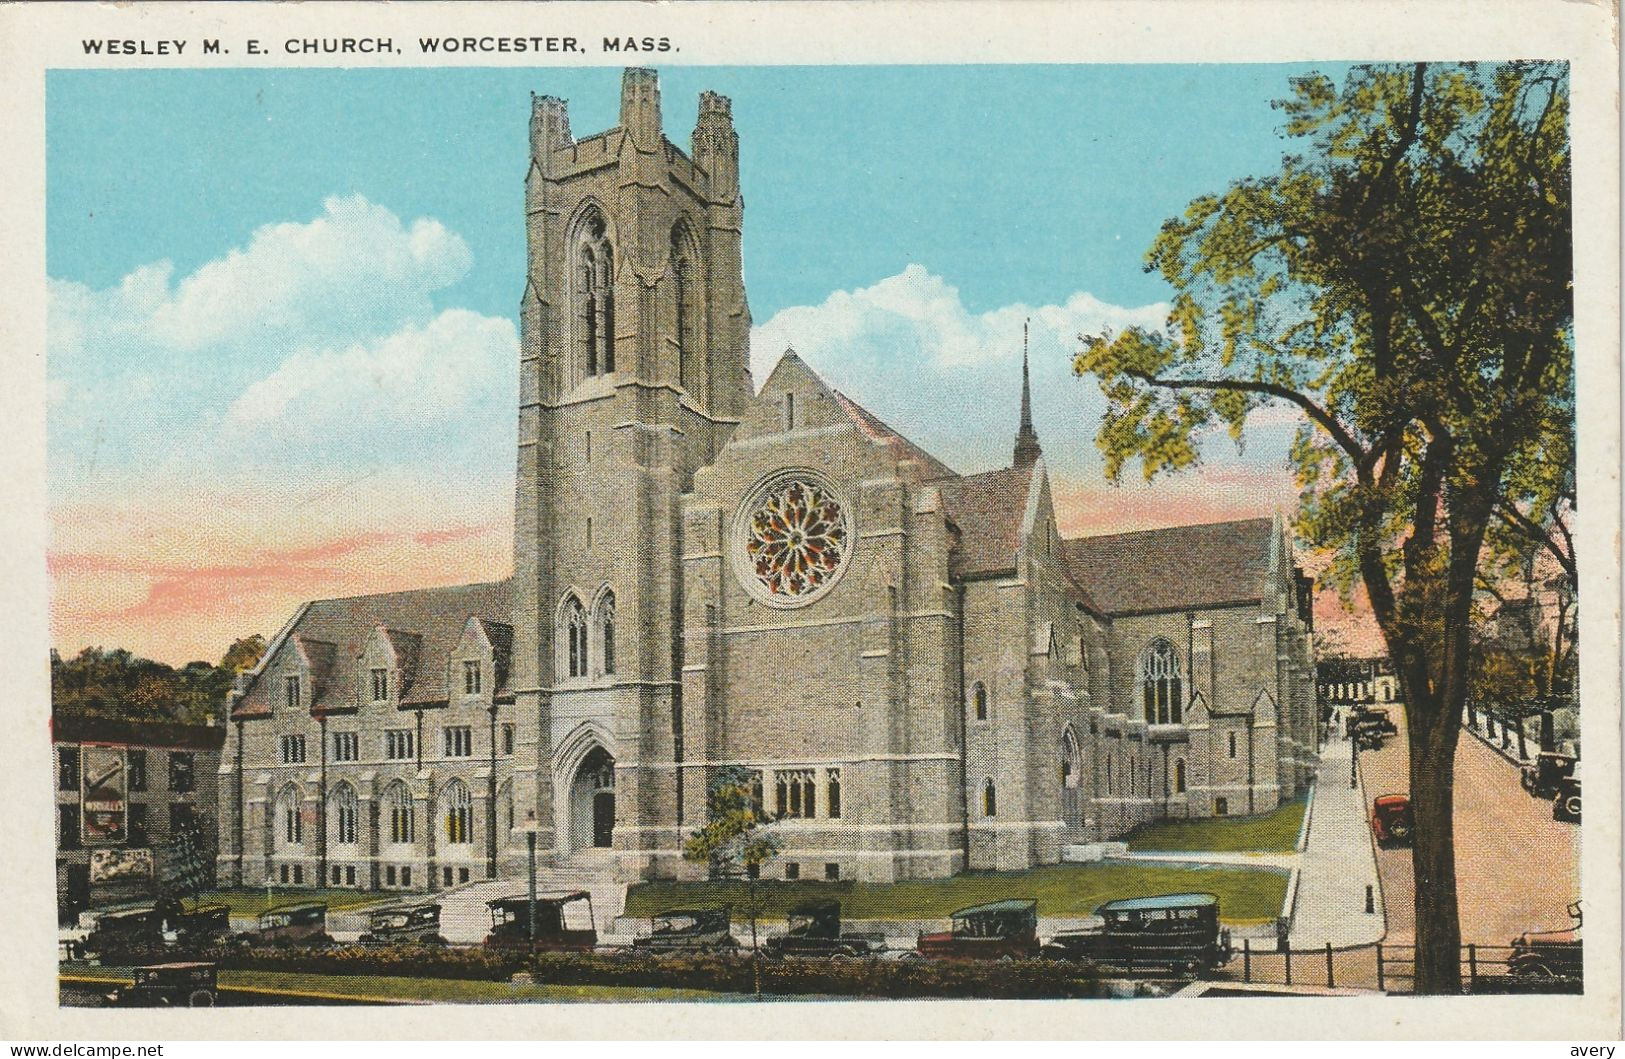 Wesley M. E. Church, Worcester, Massachusetts - Worcester